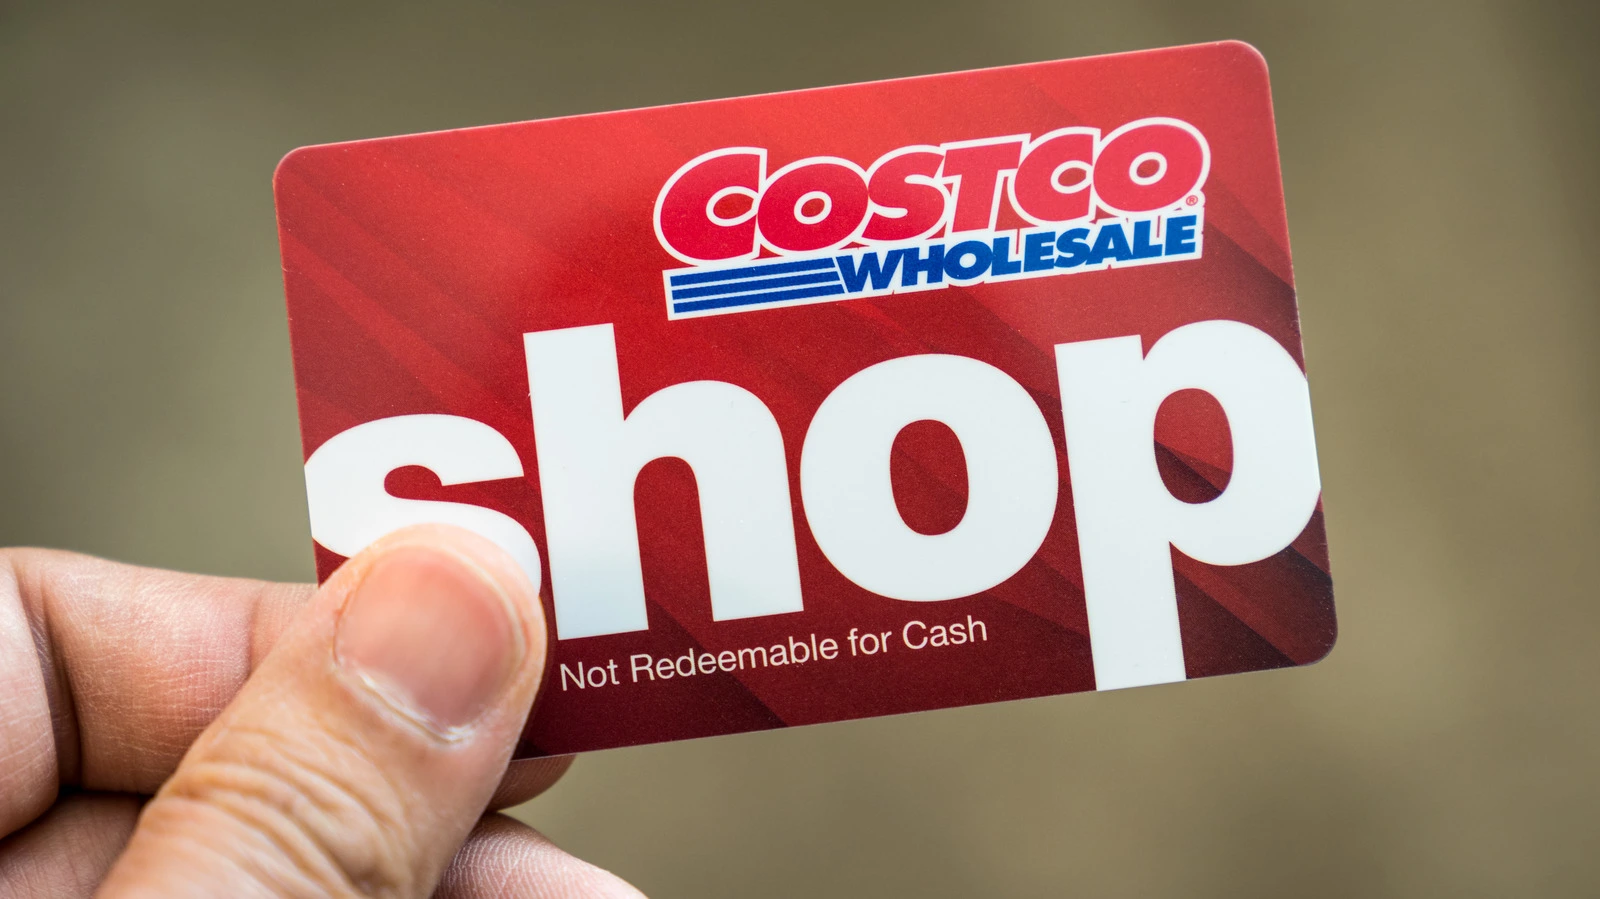 Costco Shop Card